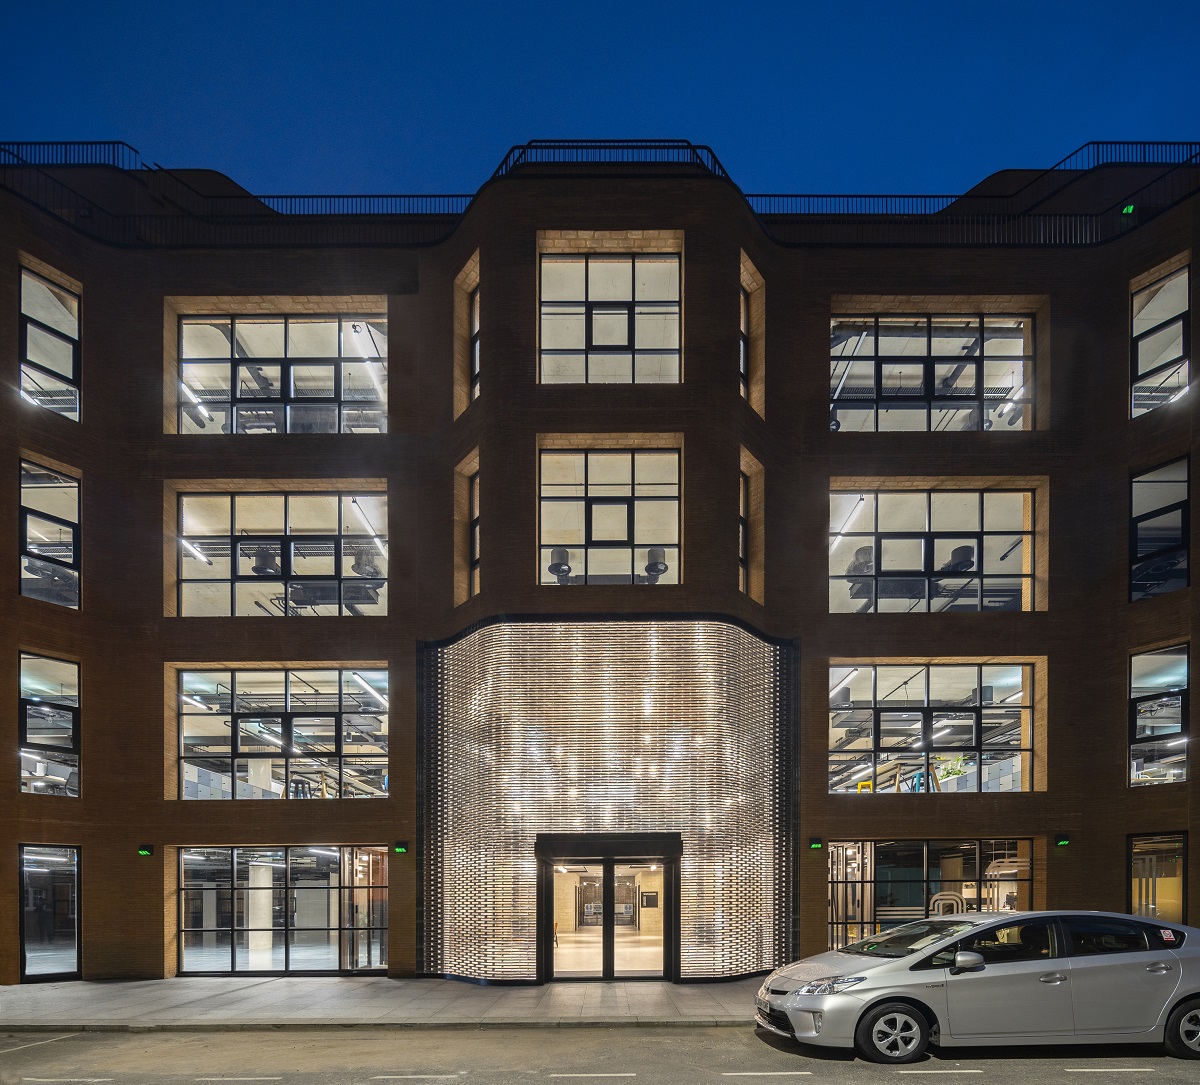 Administratívny projekt Southworks v Londýne získal ocenenie Smartest Building 2021